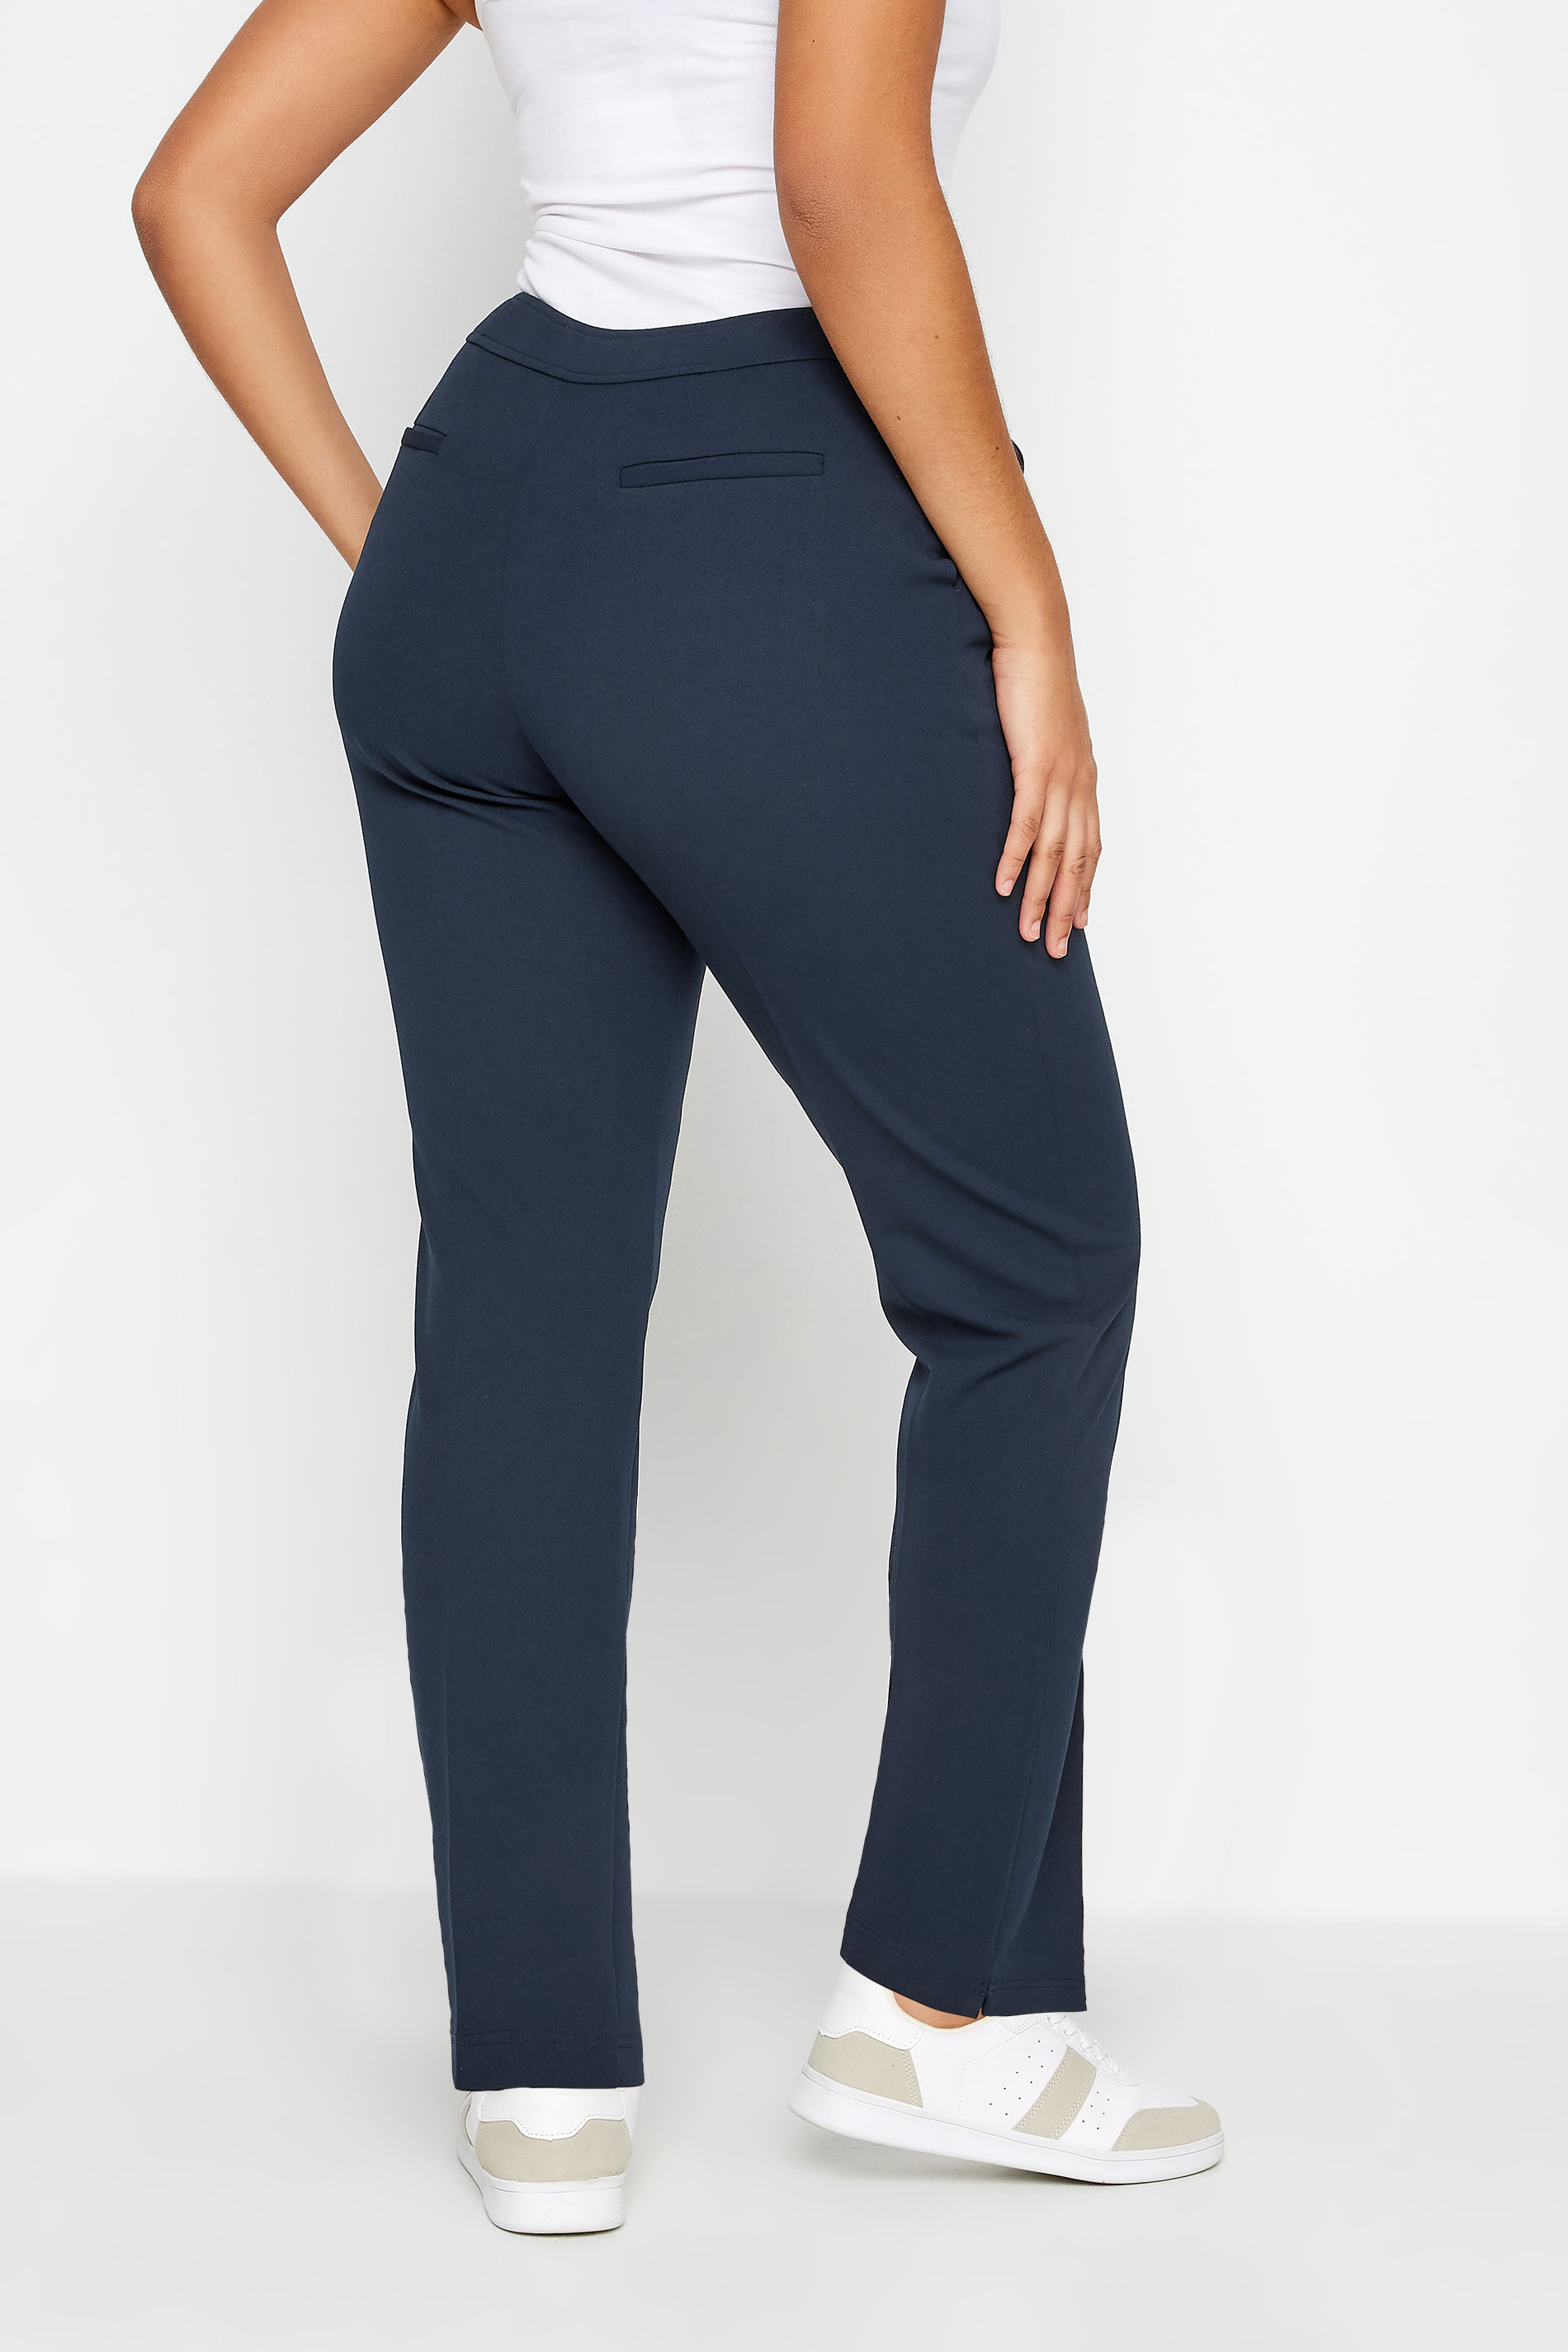 Tailored Navy Blue Women's Slim Pants